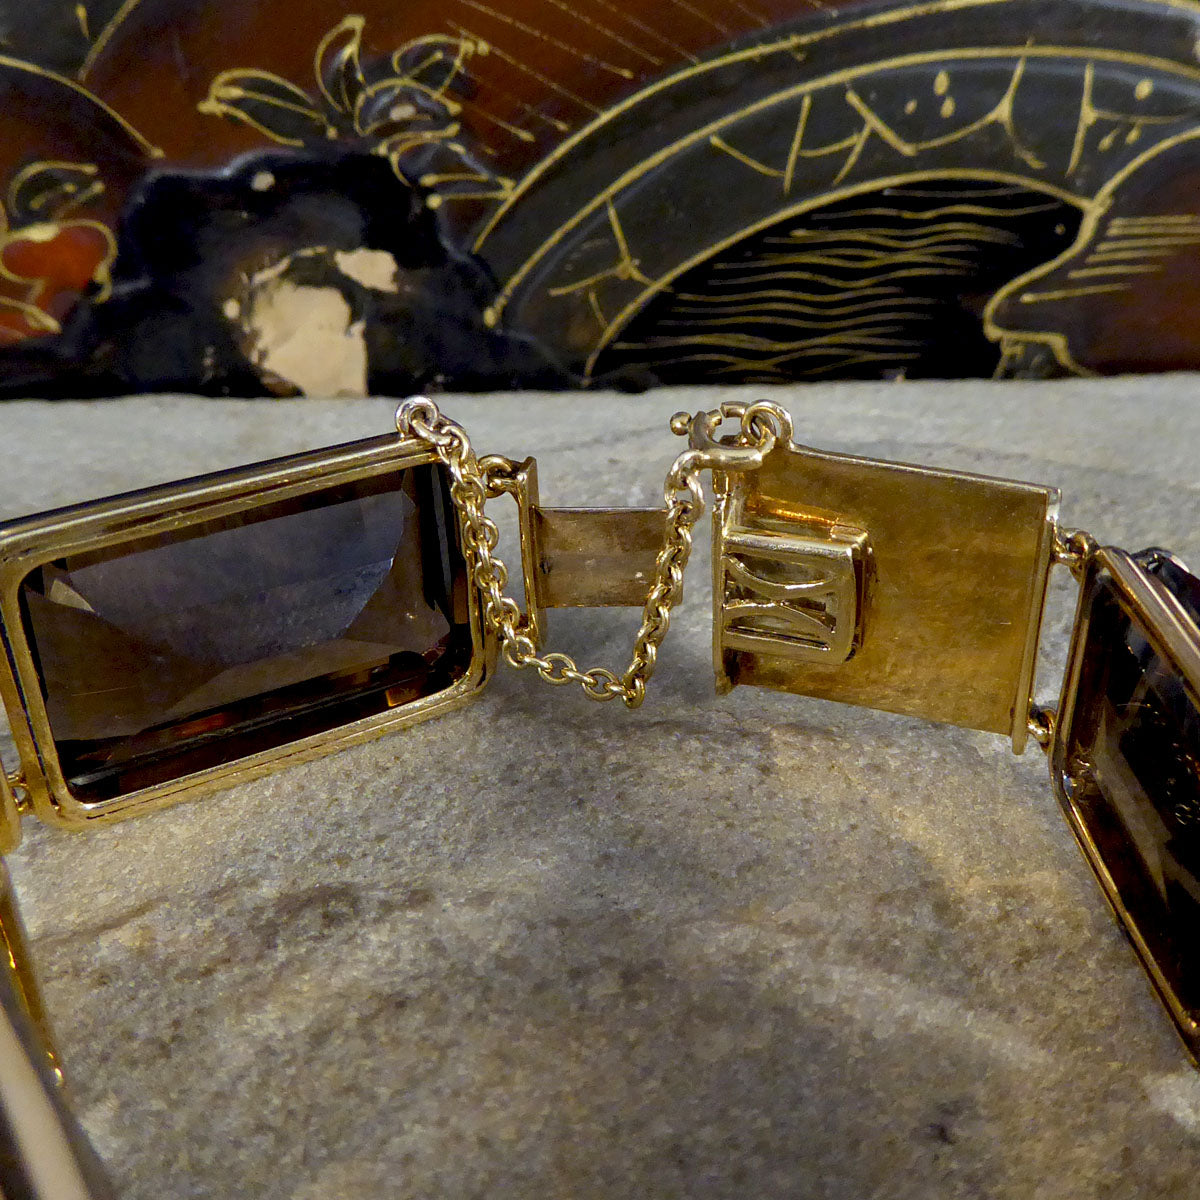 1970's Smokey Quartz Panel Bracelet in 9ct Yellow Gold with Bark Detail